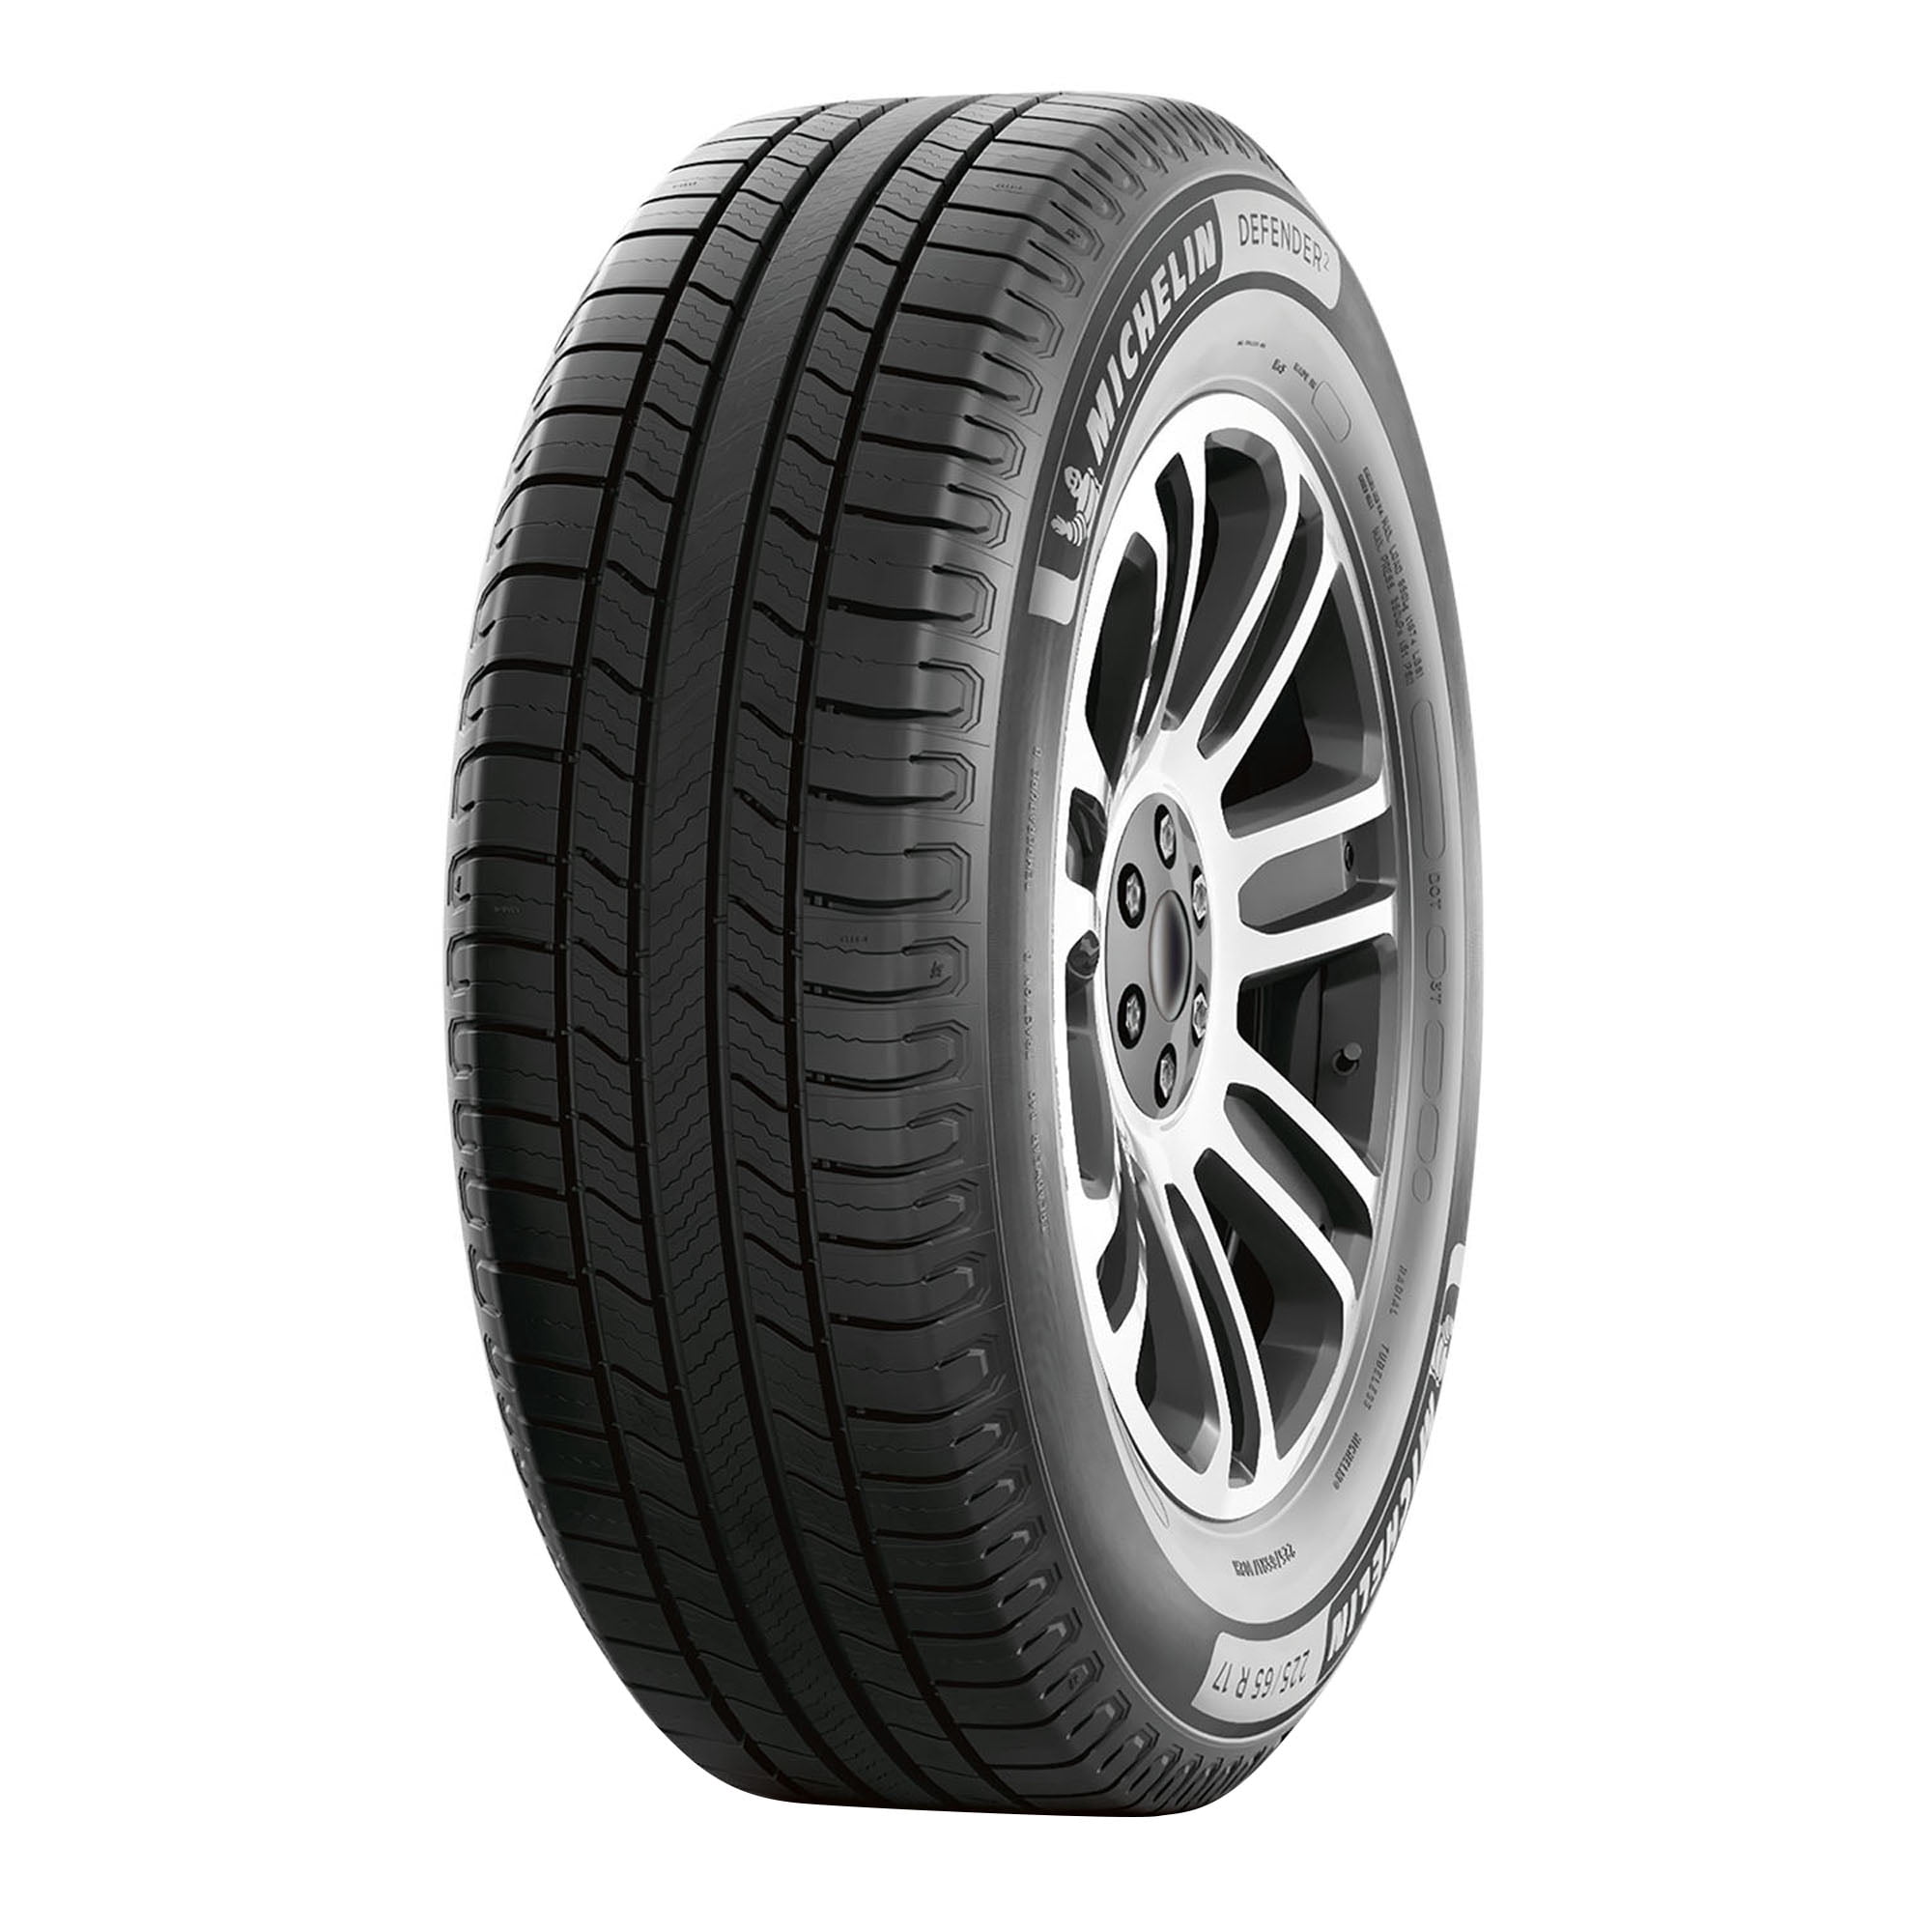 MICHELIN 225/55/17 - Speedo Trade - Pirelli - tires - كوتشات - ميشلان -  اطارات - Michelin